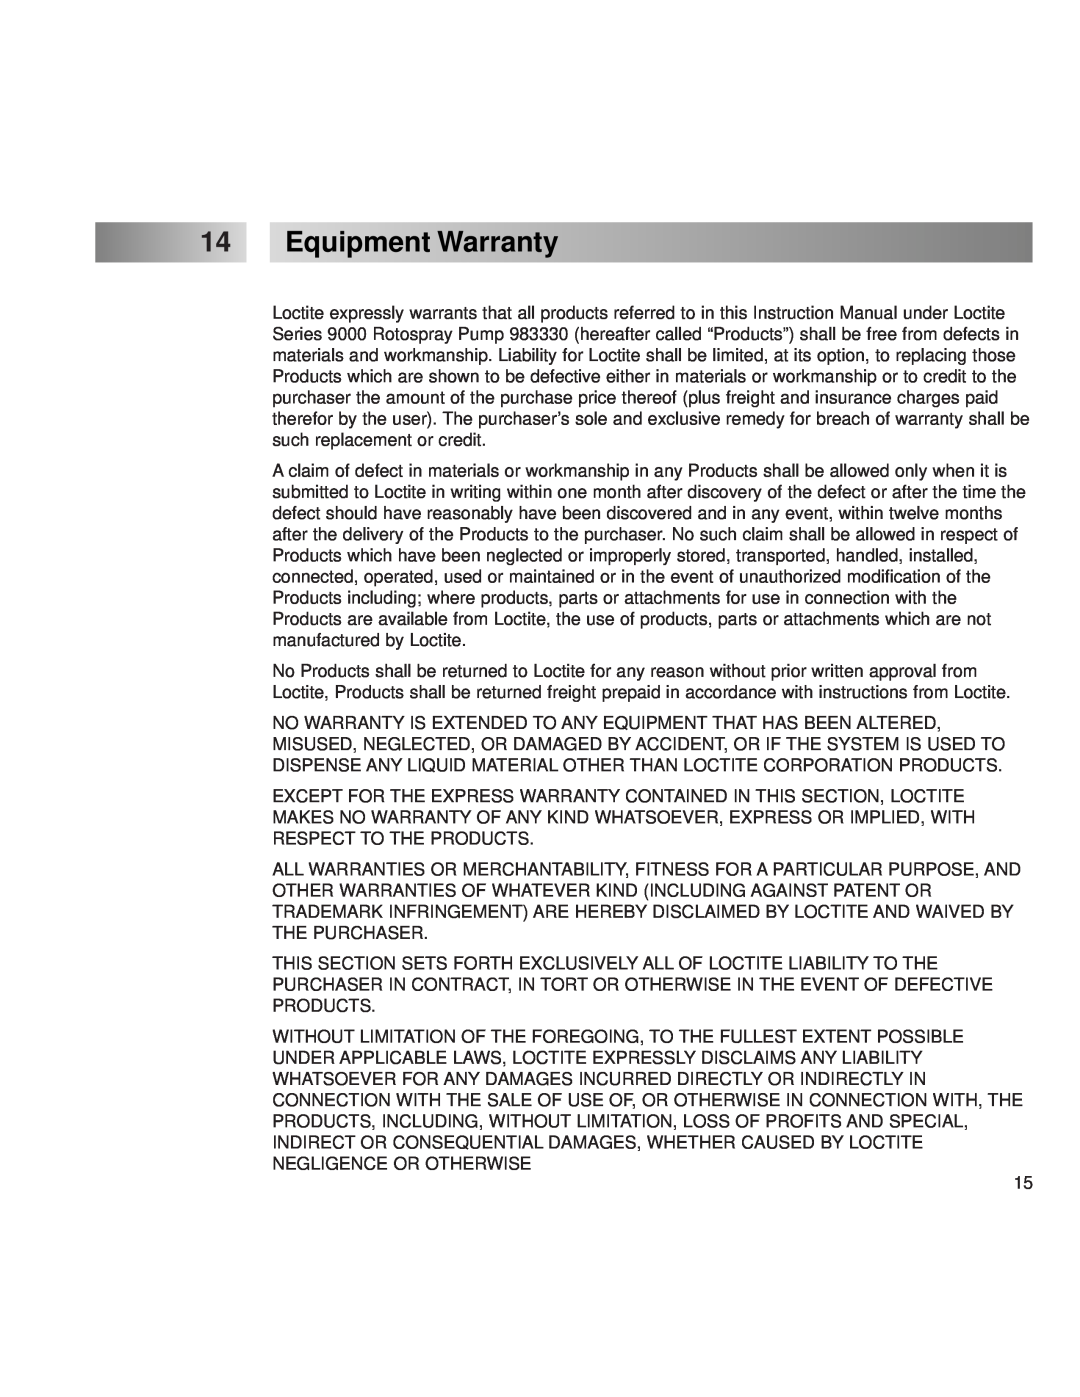 Henkel 9000 operation manual 14Equipment Warranty 